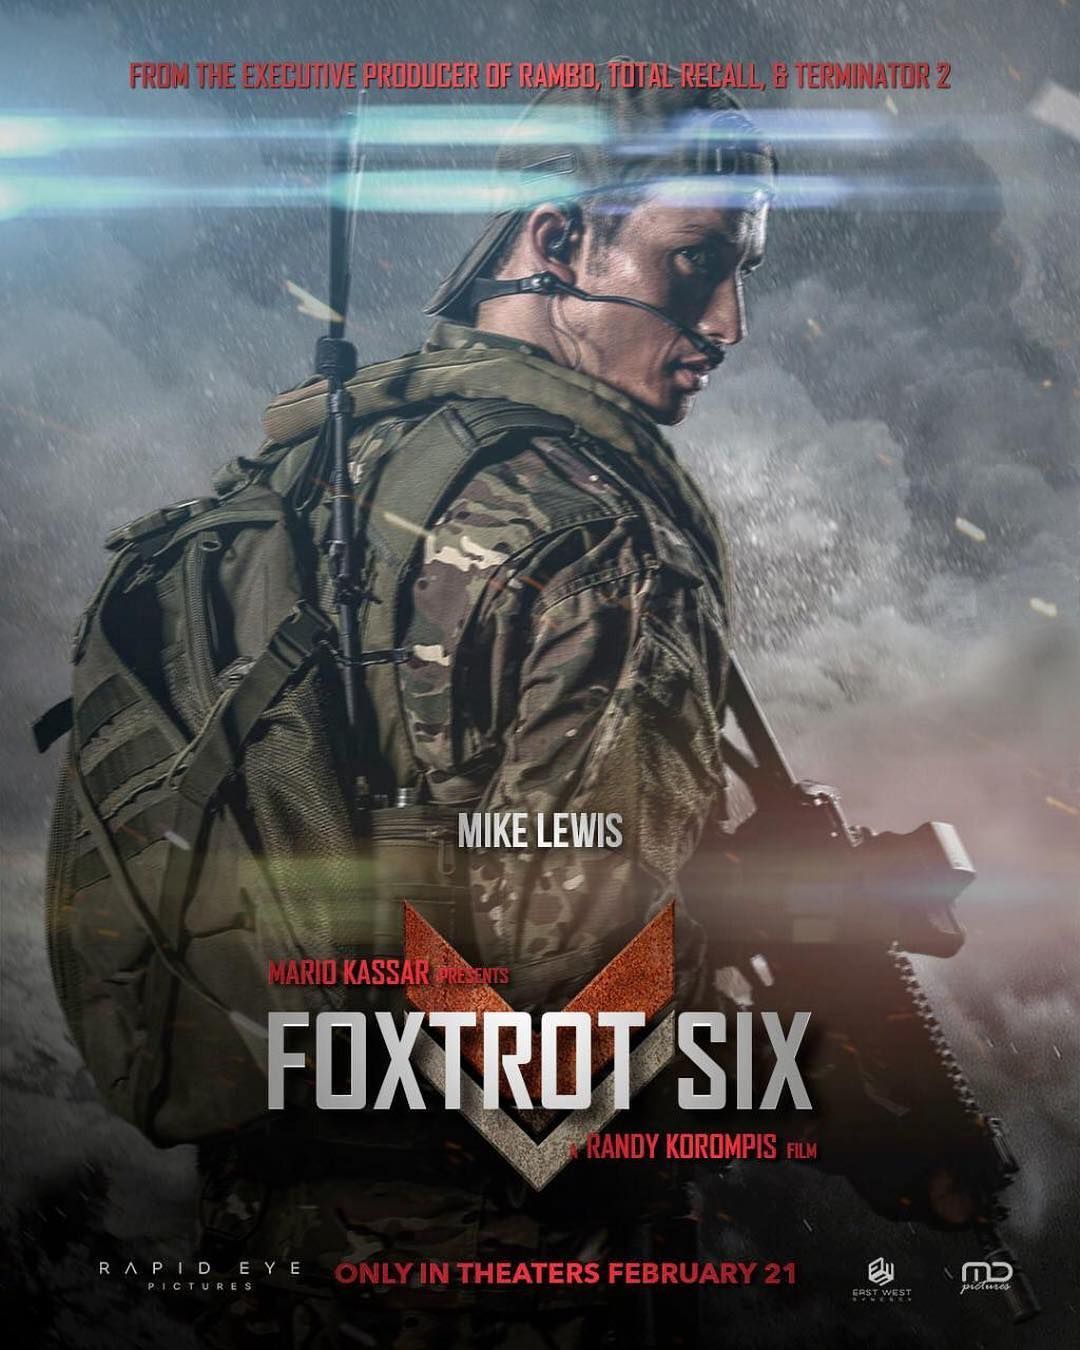 Foxtrot Six. Movie covers, War movies, 2020 movies